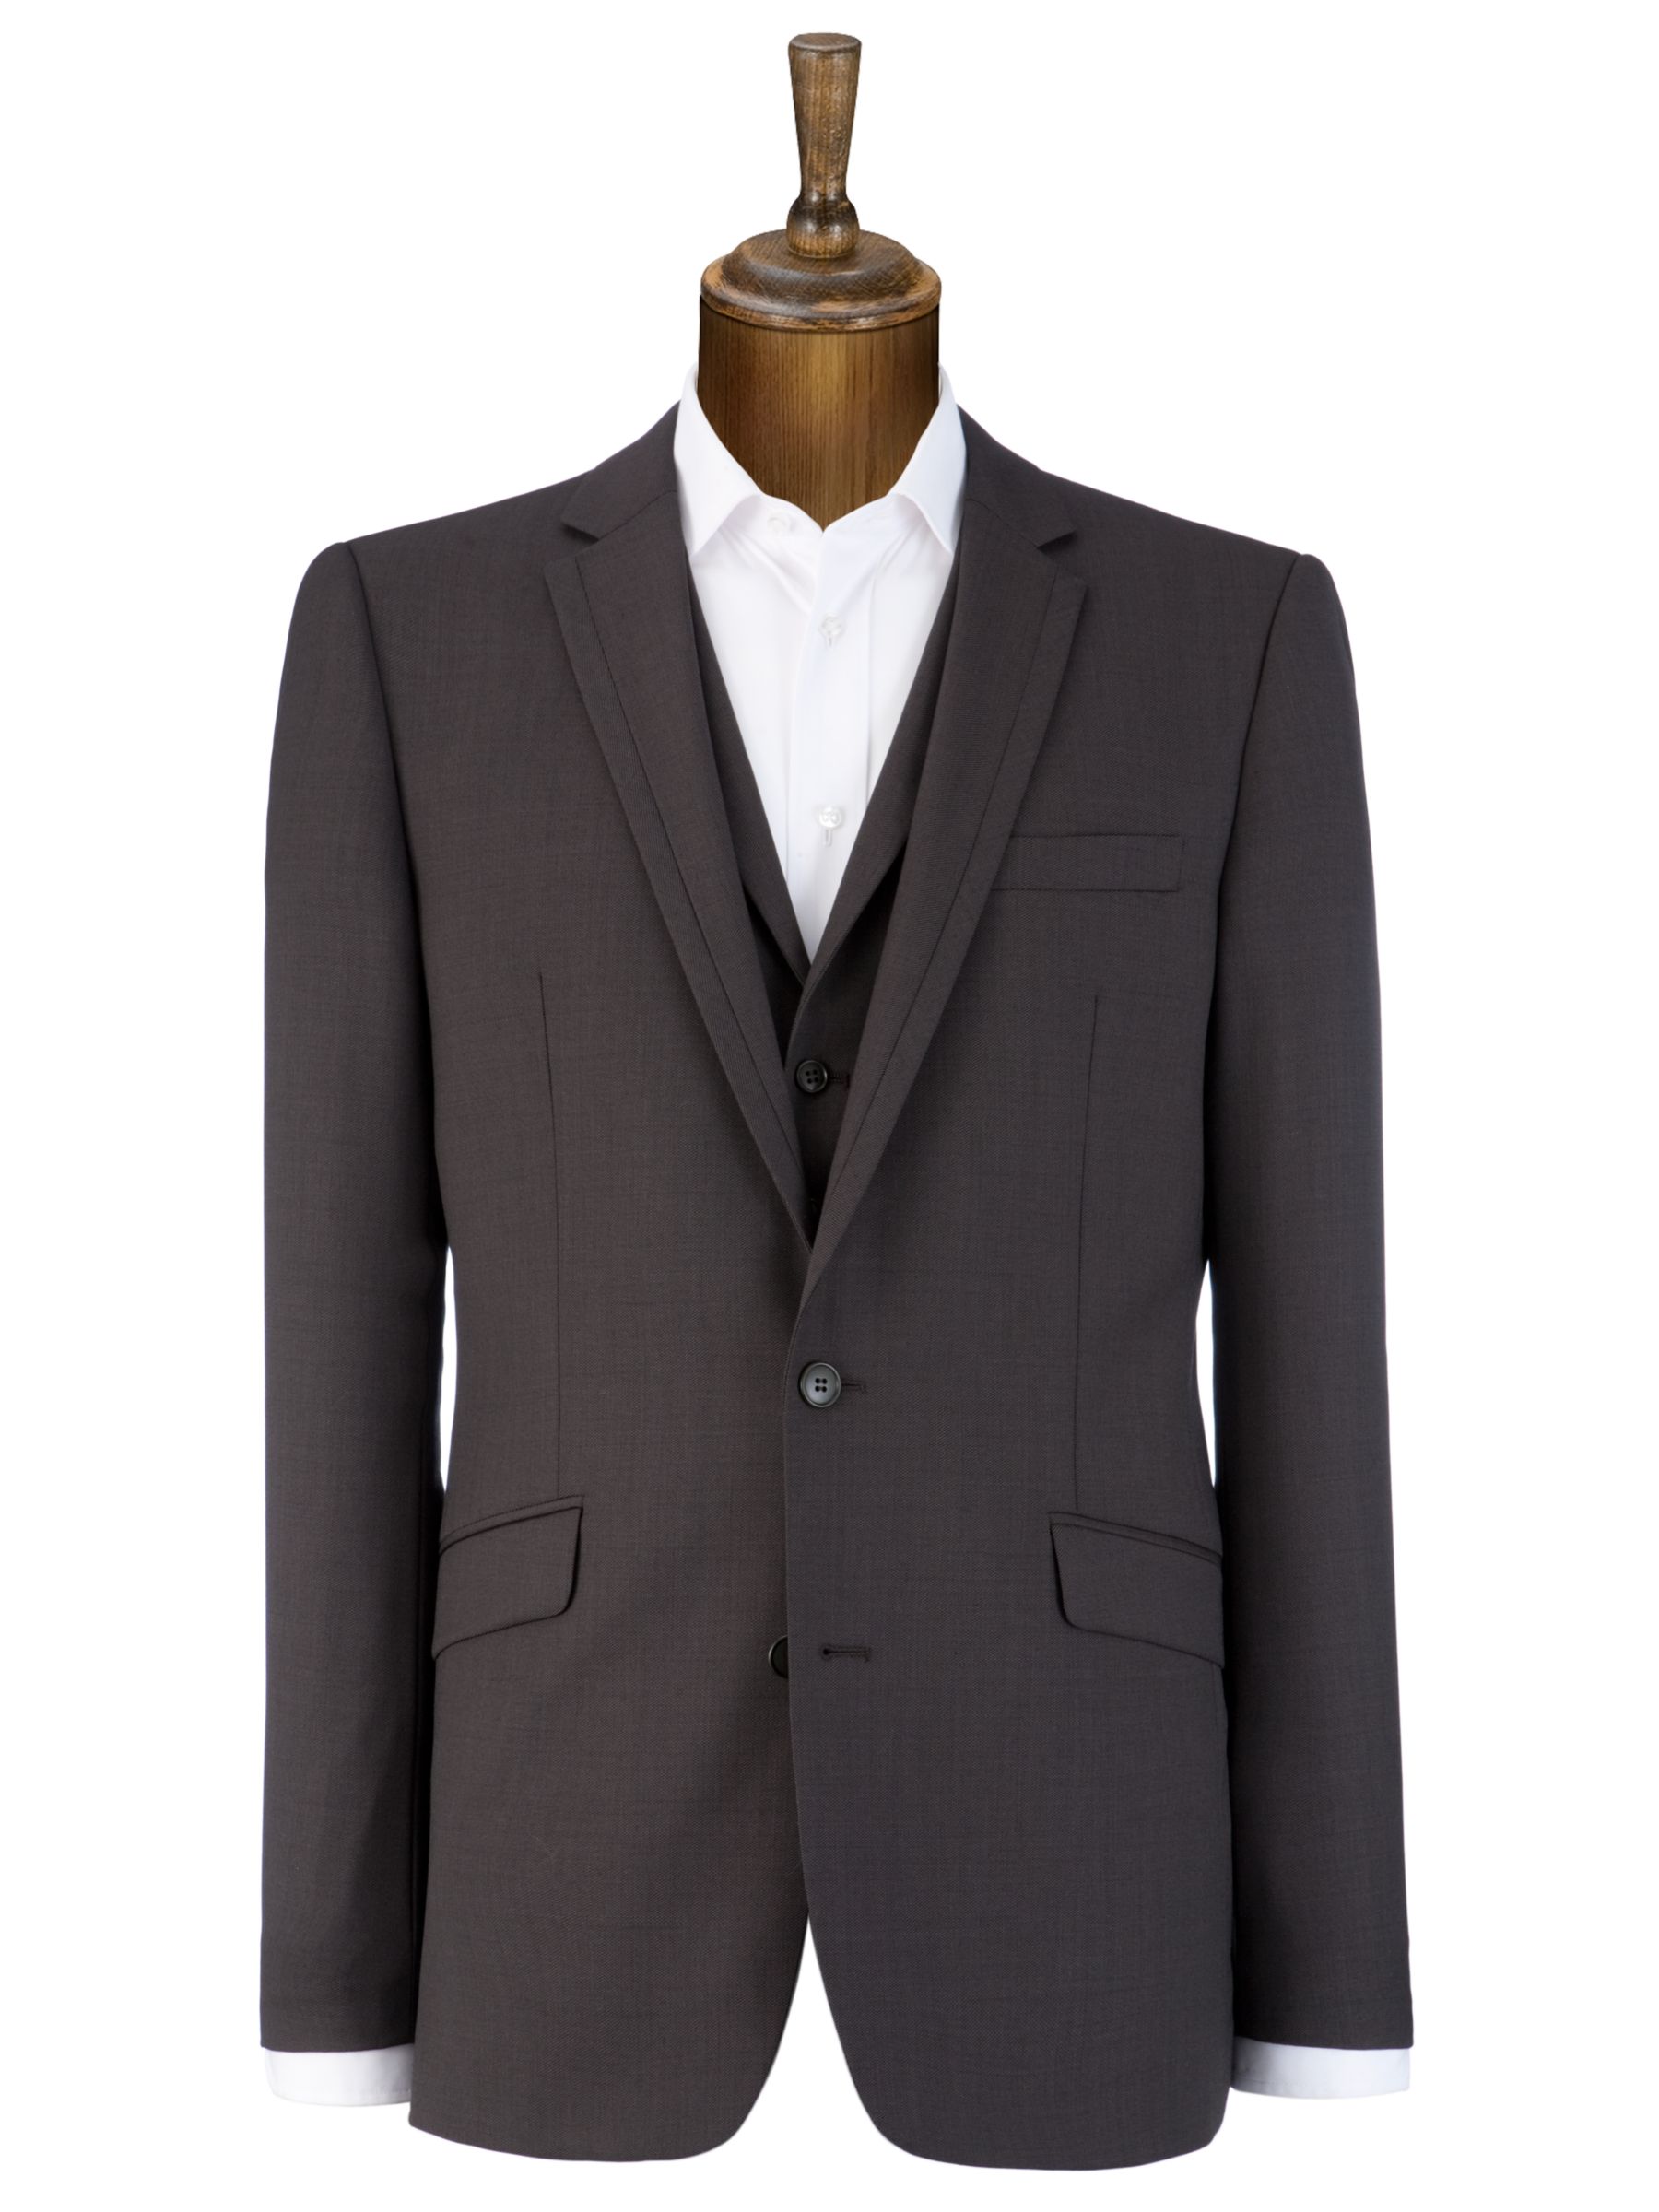 COLLECTION, John Lewis Birdseye With Silk Suit Jacket, Grey at John Lewis